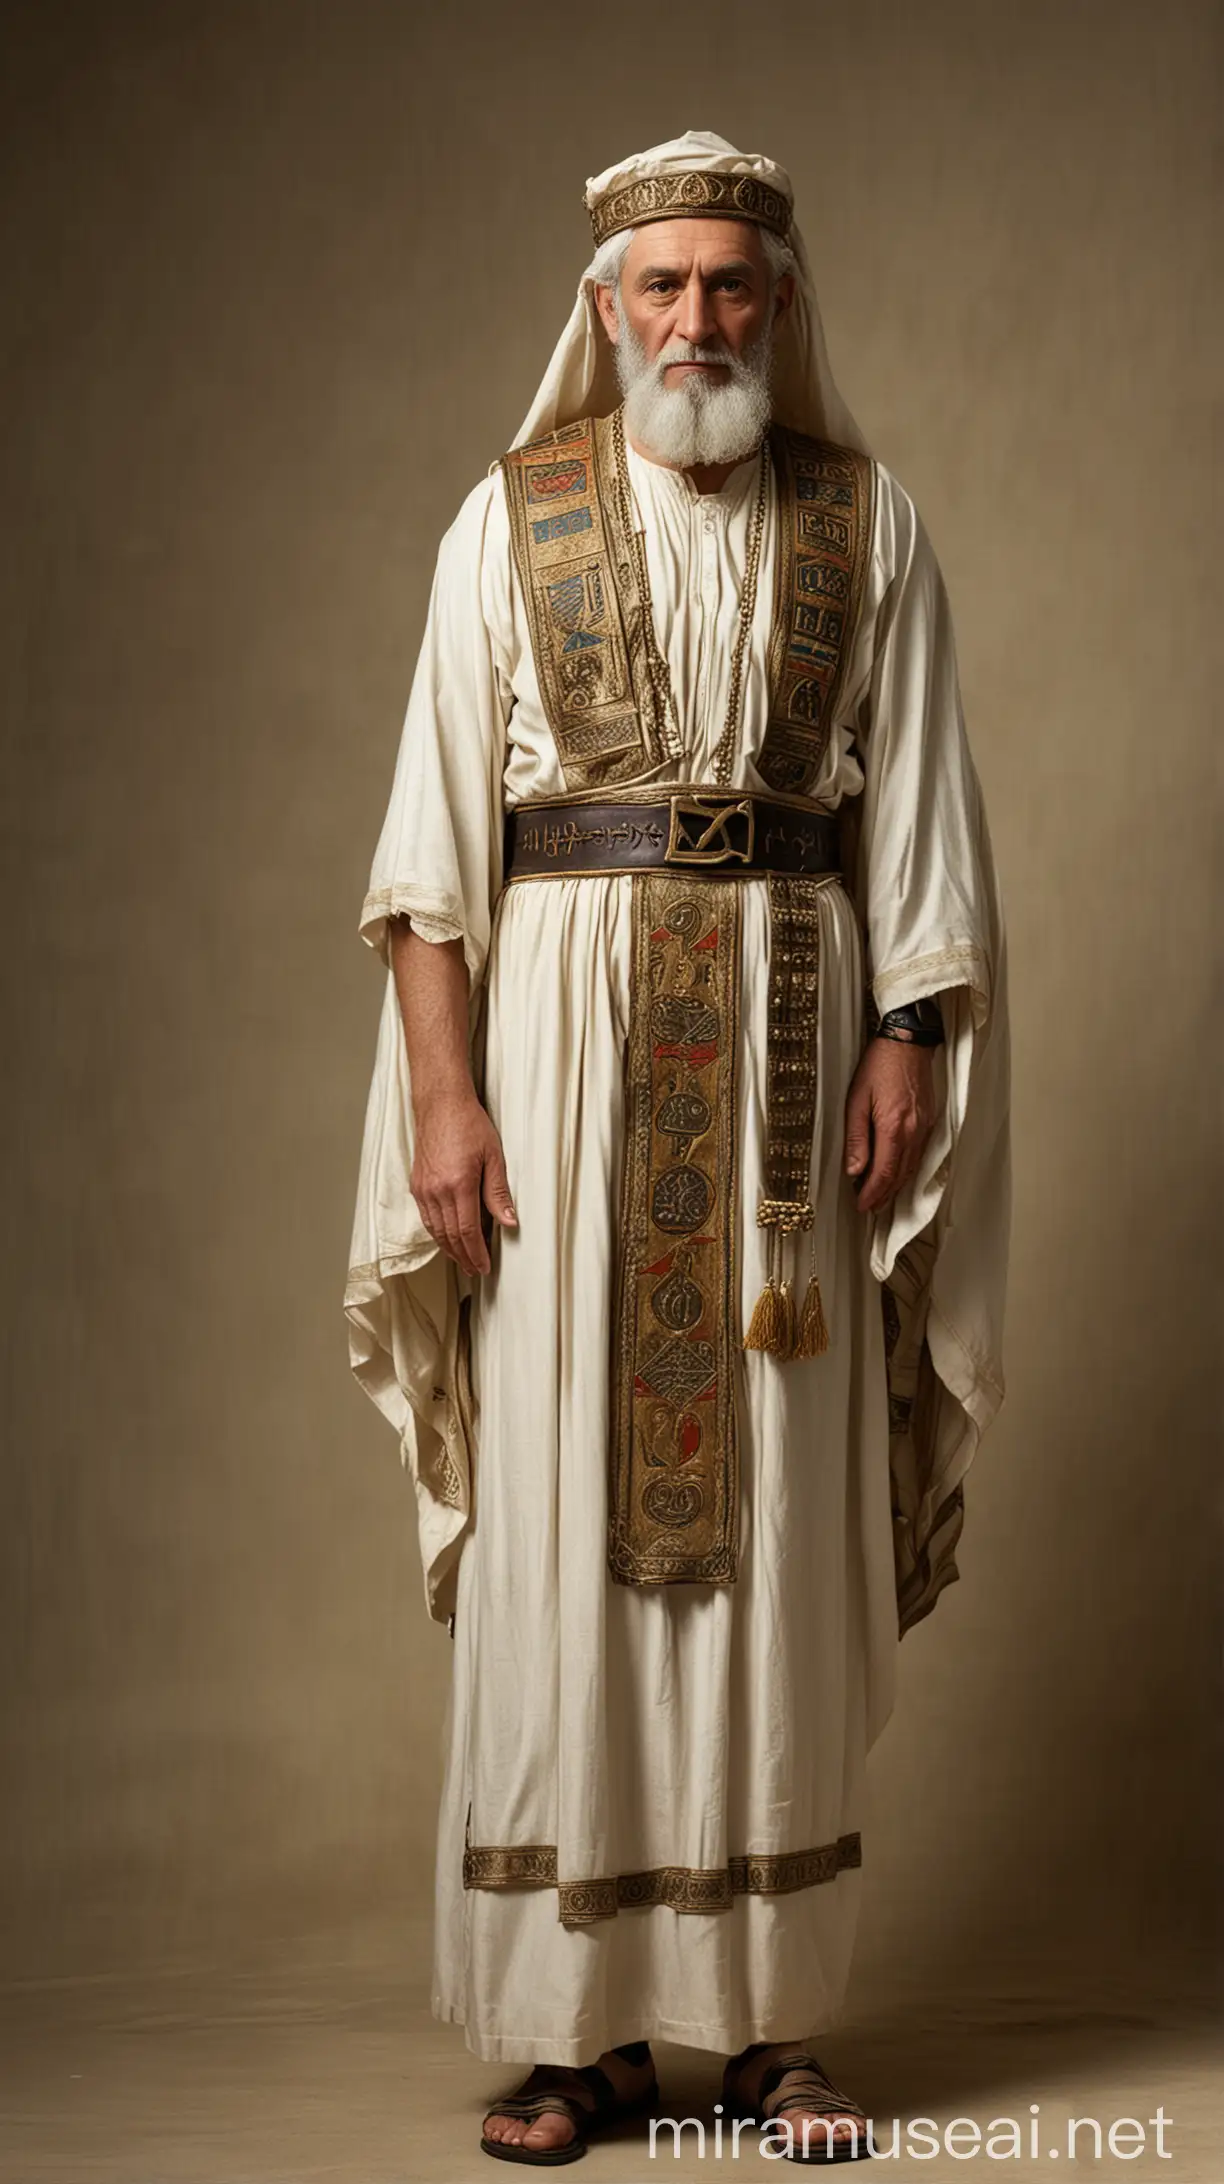 5th Century BC Priest Azarael in Traditional Hebrew Garments